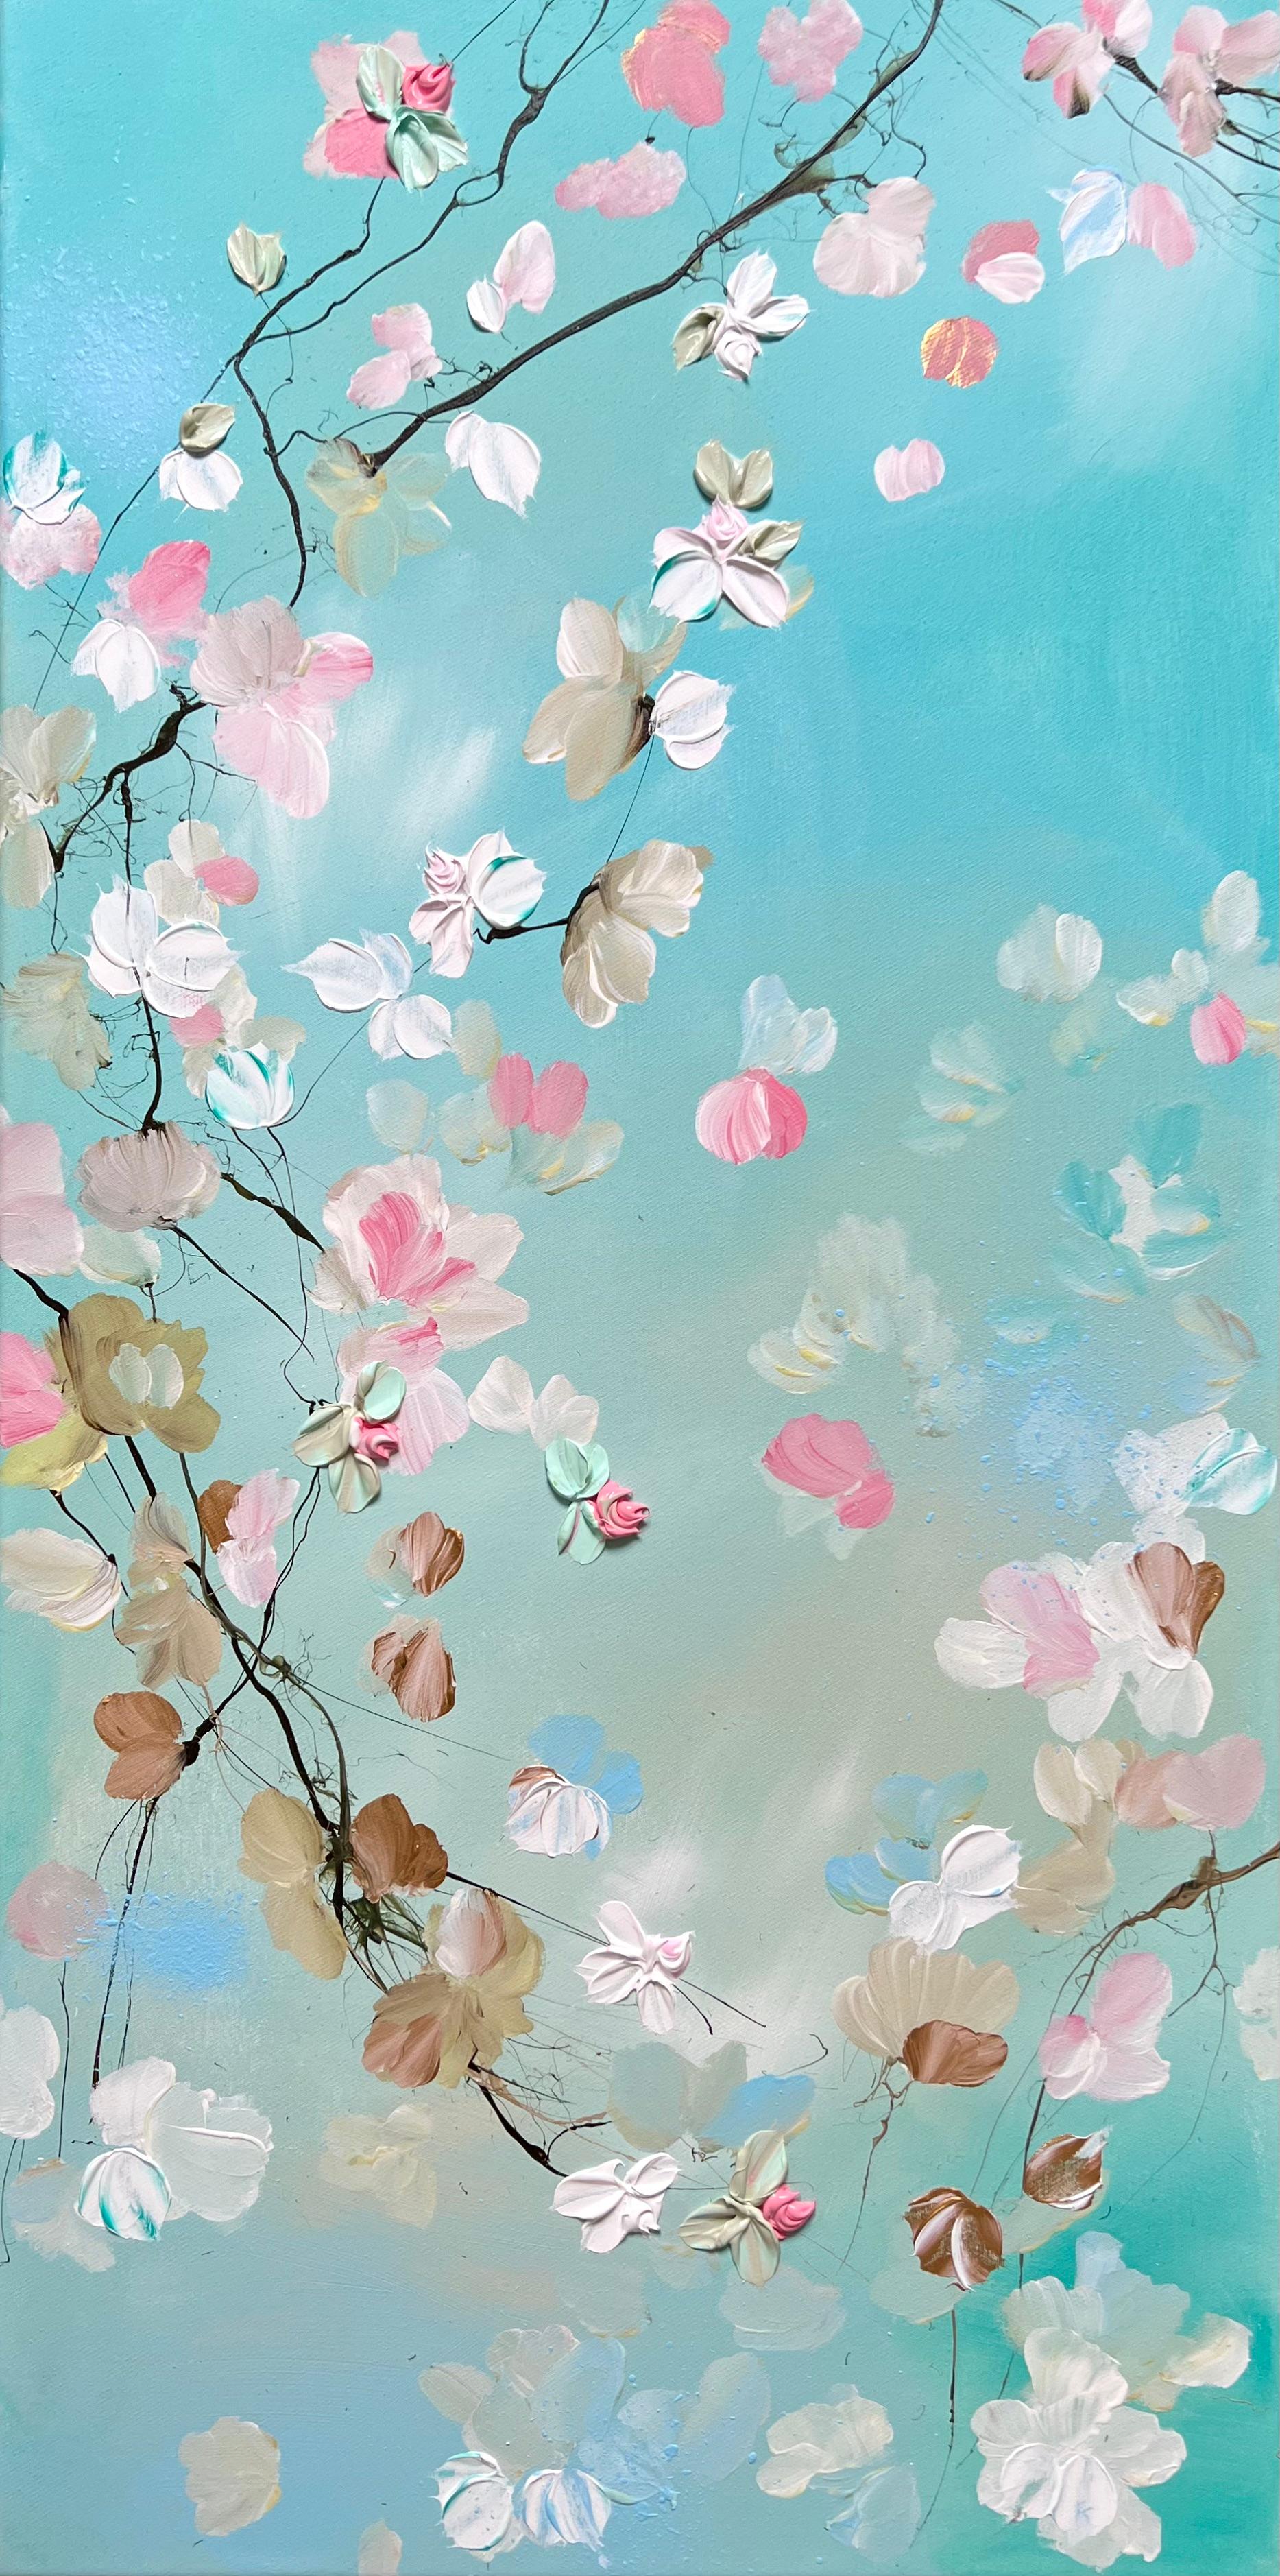 Anastassia Skopp Interior Painting - "FLOW" floral artwork